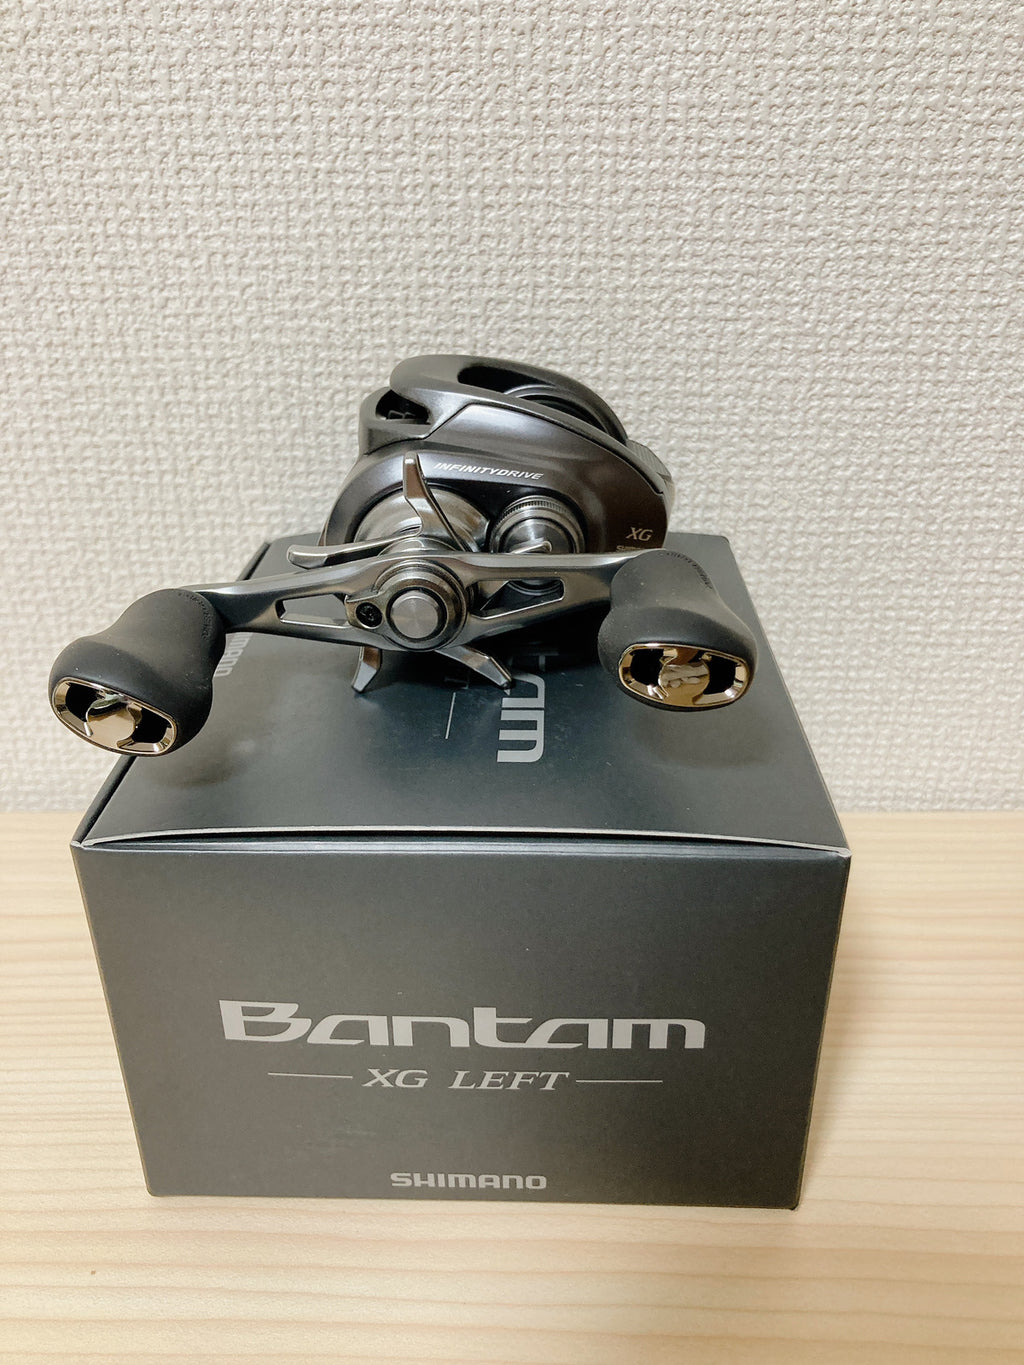 Shimano Baitcasting Reel 22 Bantam XG Left Gear Ratio 8.1:1 IN BOX